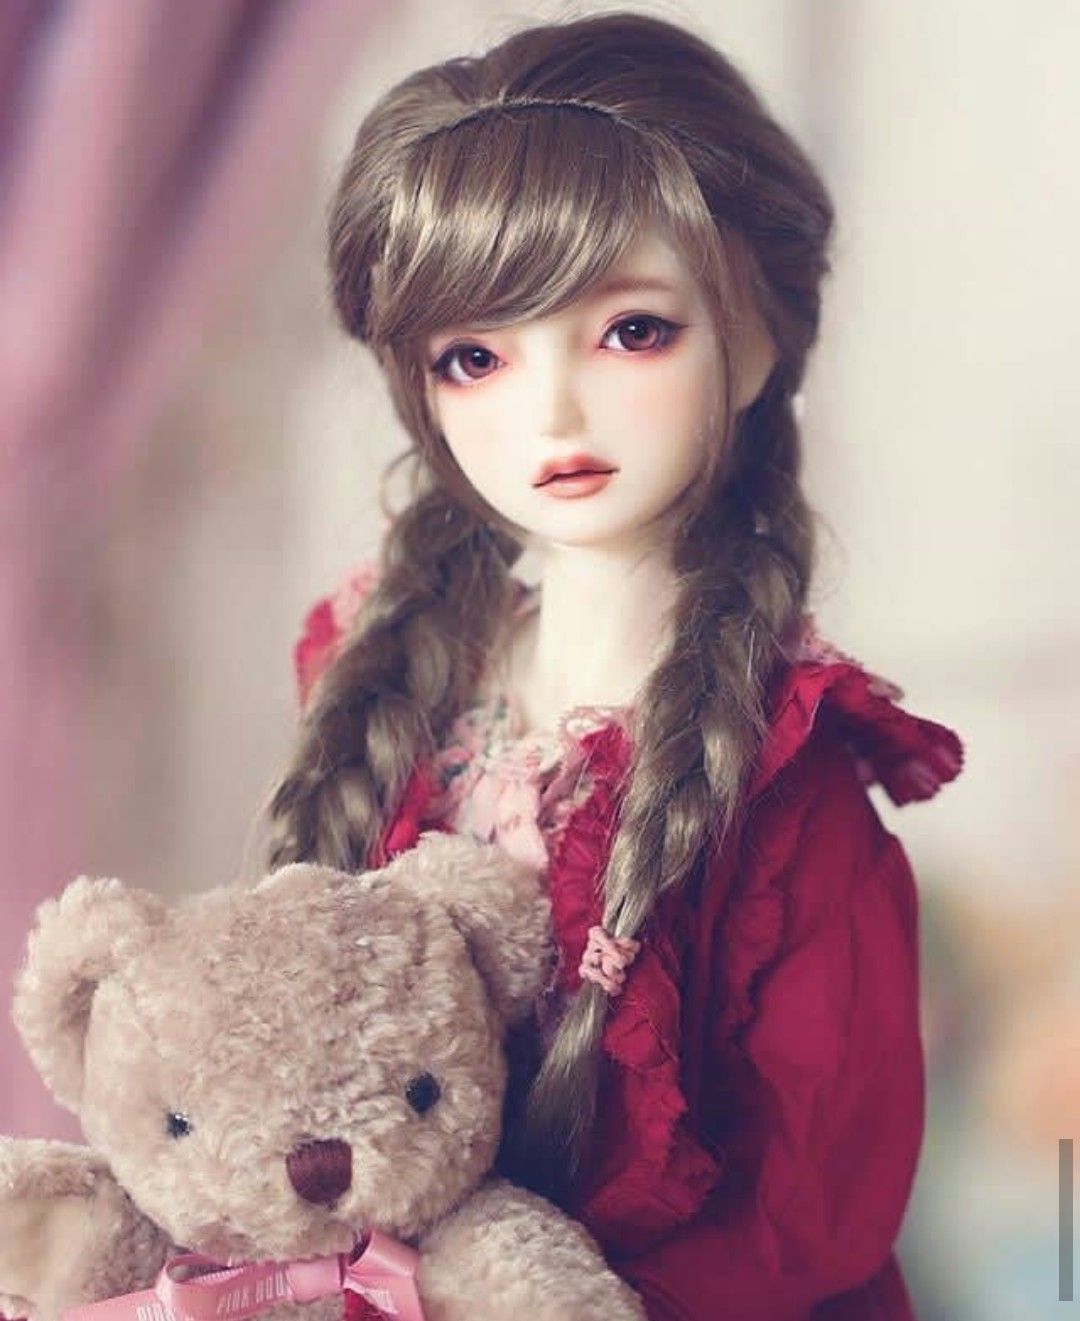 Whatsapp Dp Princess Cute Dolls Images 11